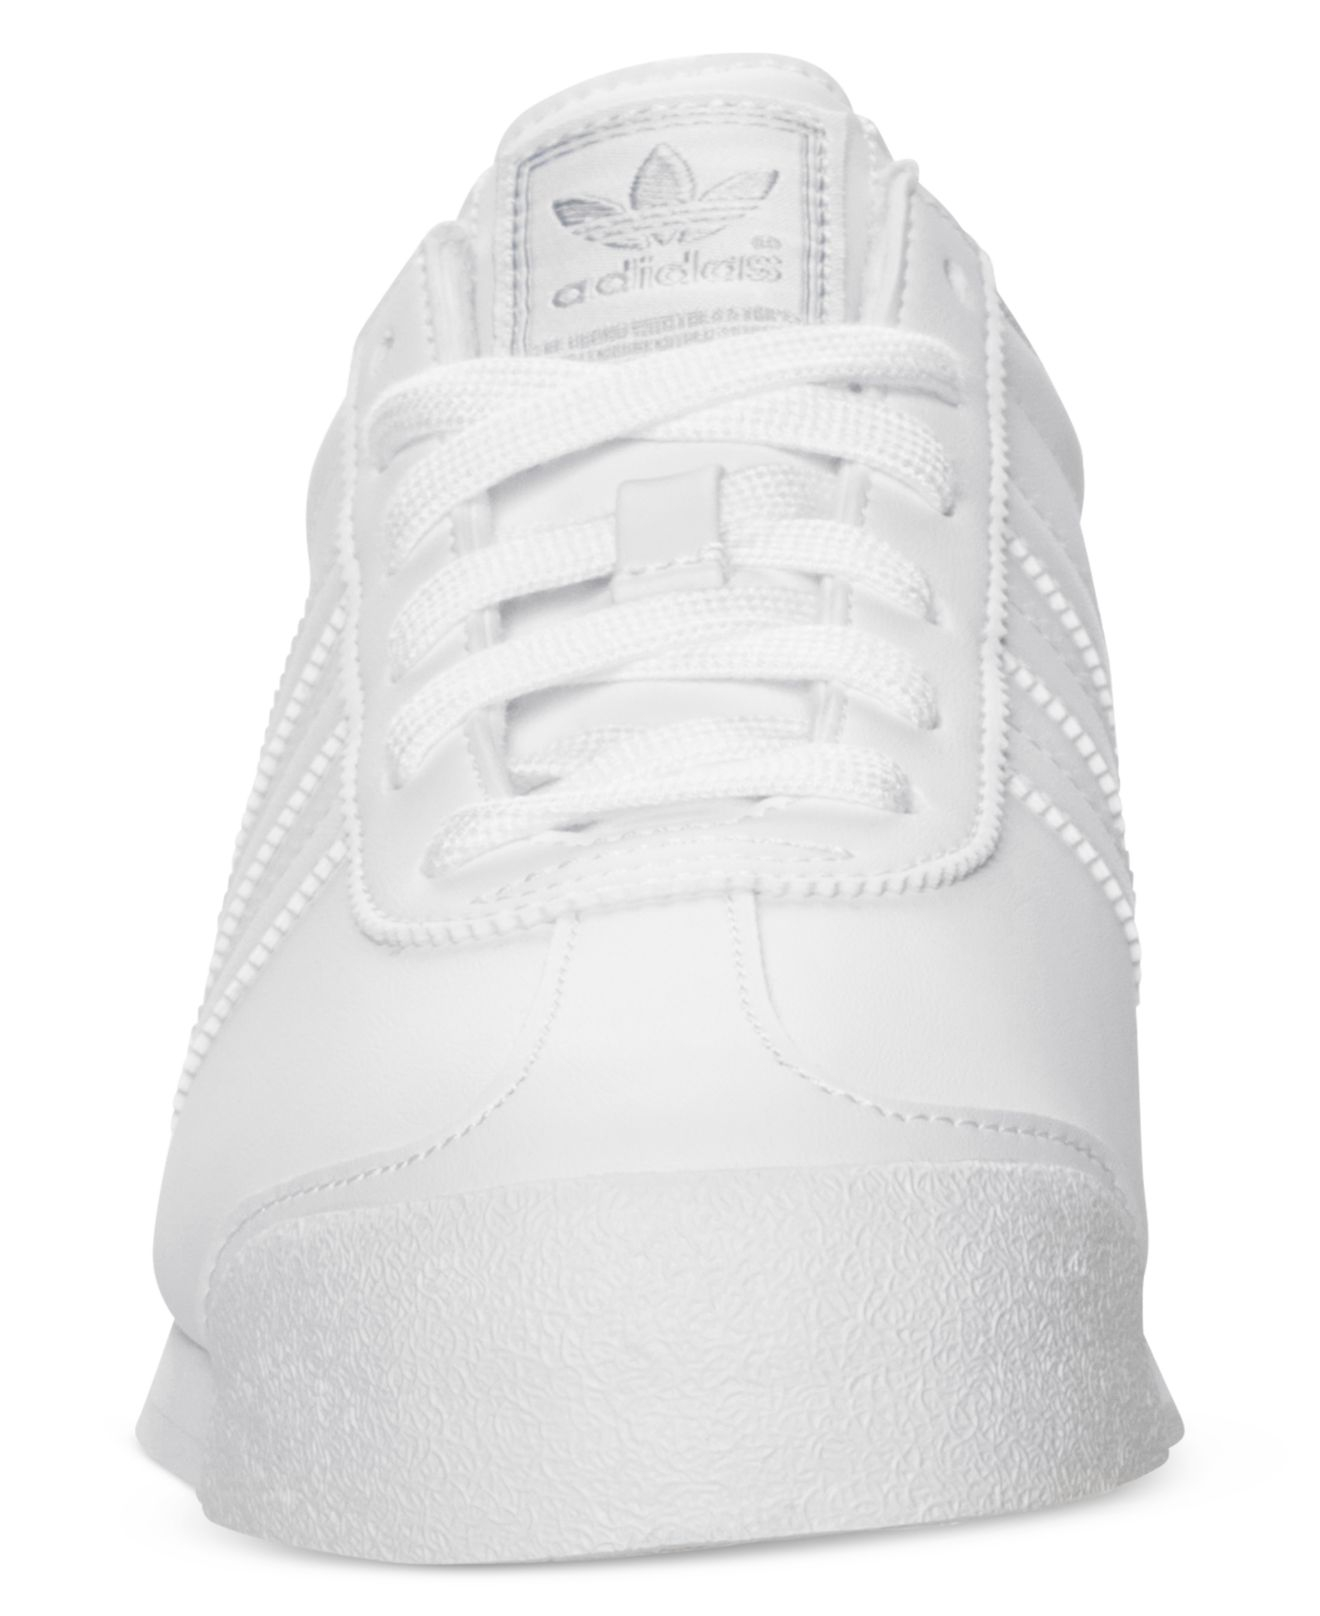 white adidas samoa women's